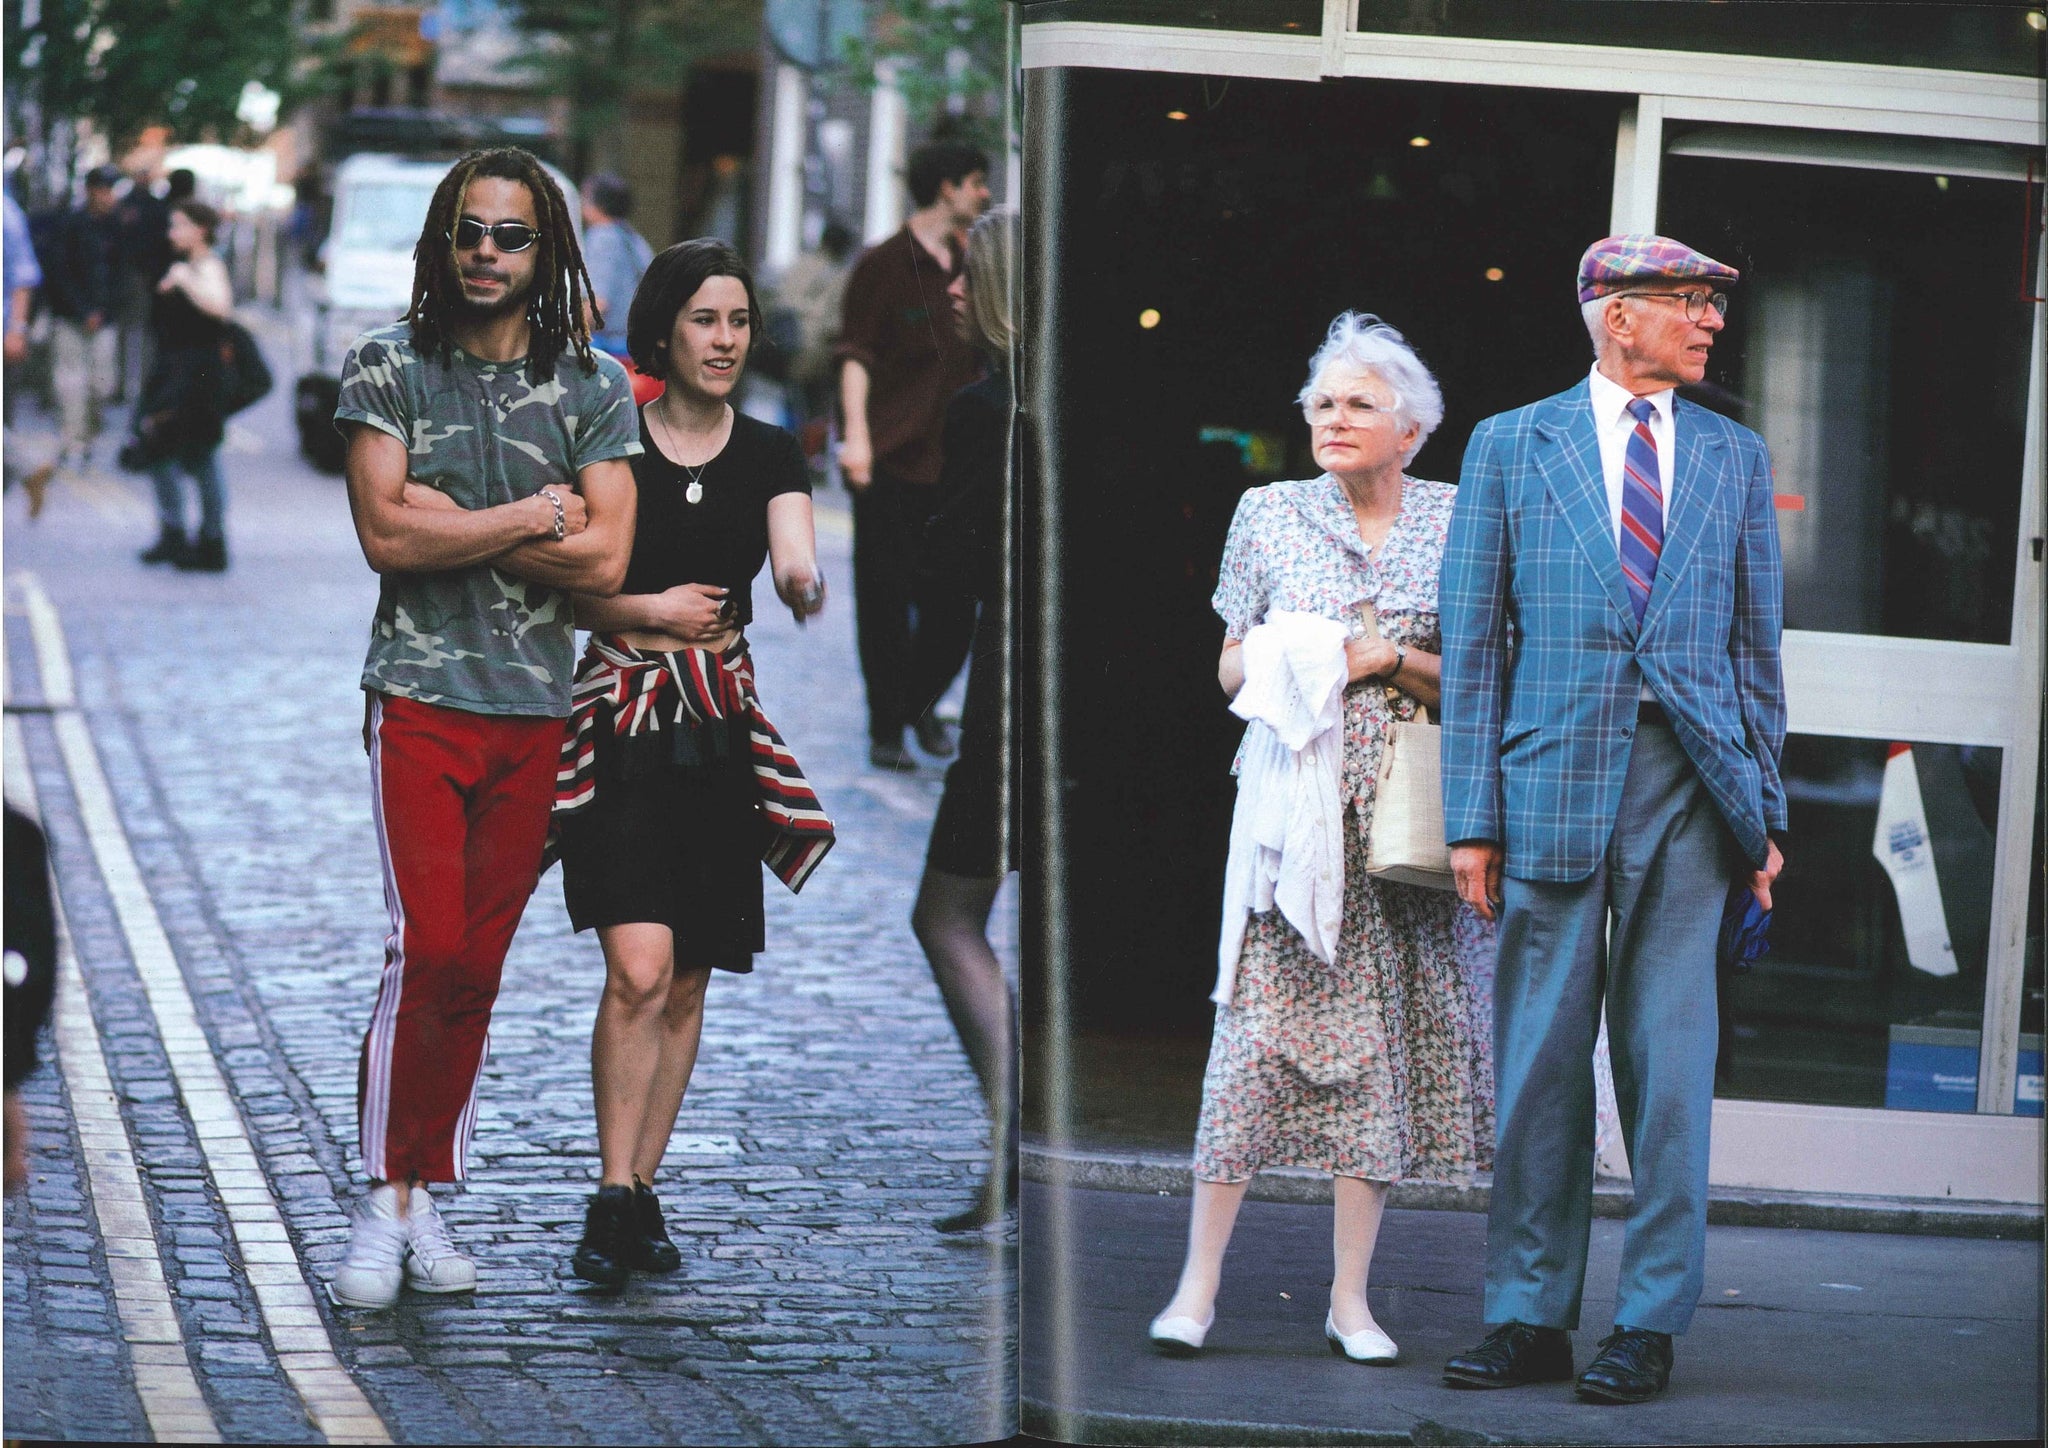 STREET magazine no. 74 / september 1995 / fashion in london / Shoichi Aoki